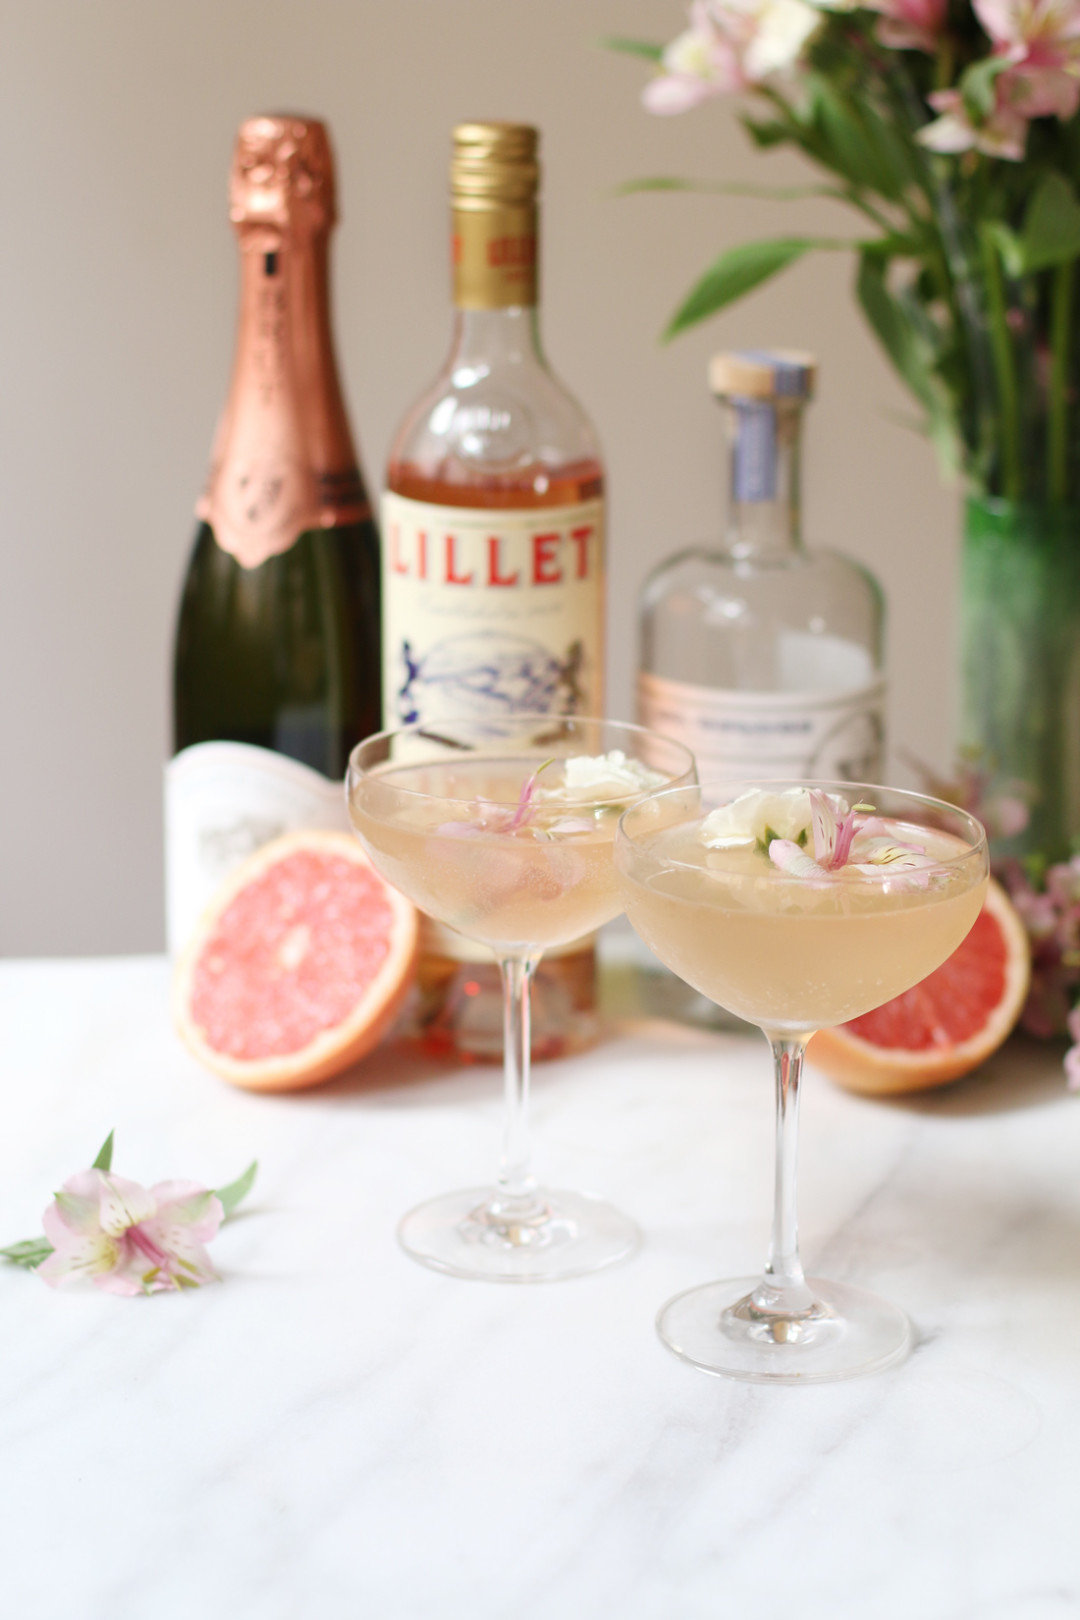 Lillet Rose - Easy Spring Cocktail Recipe